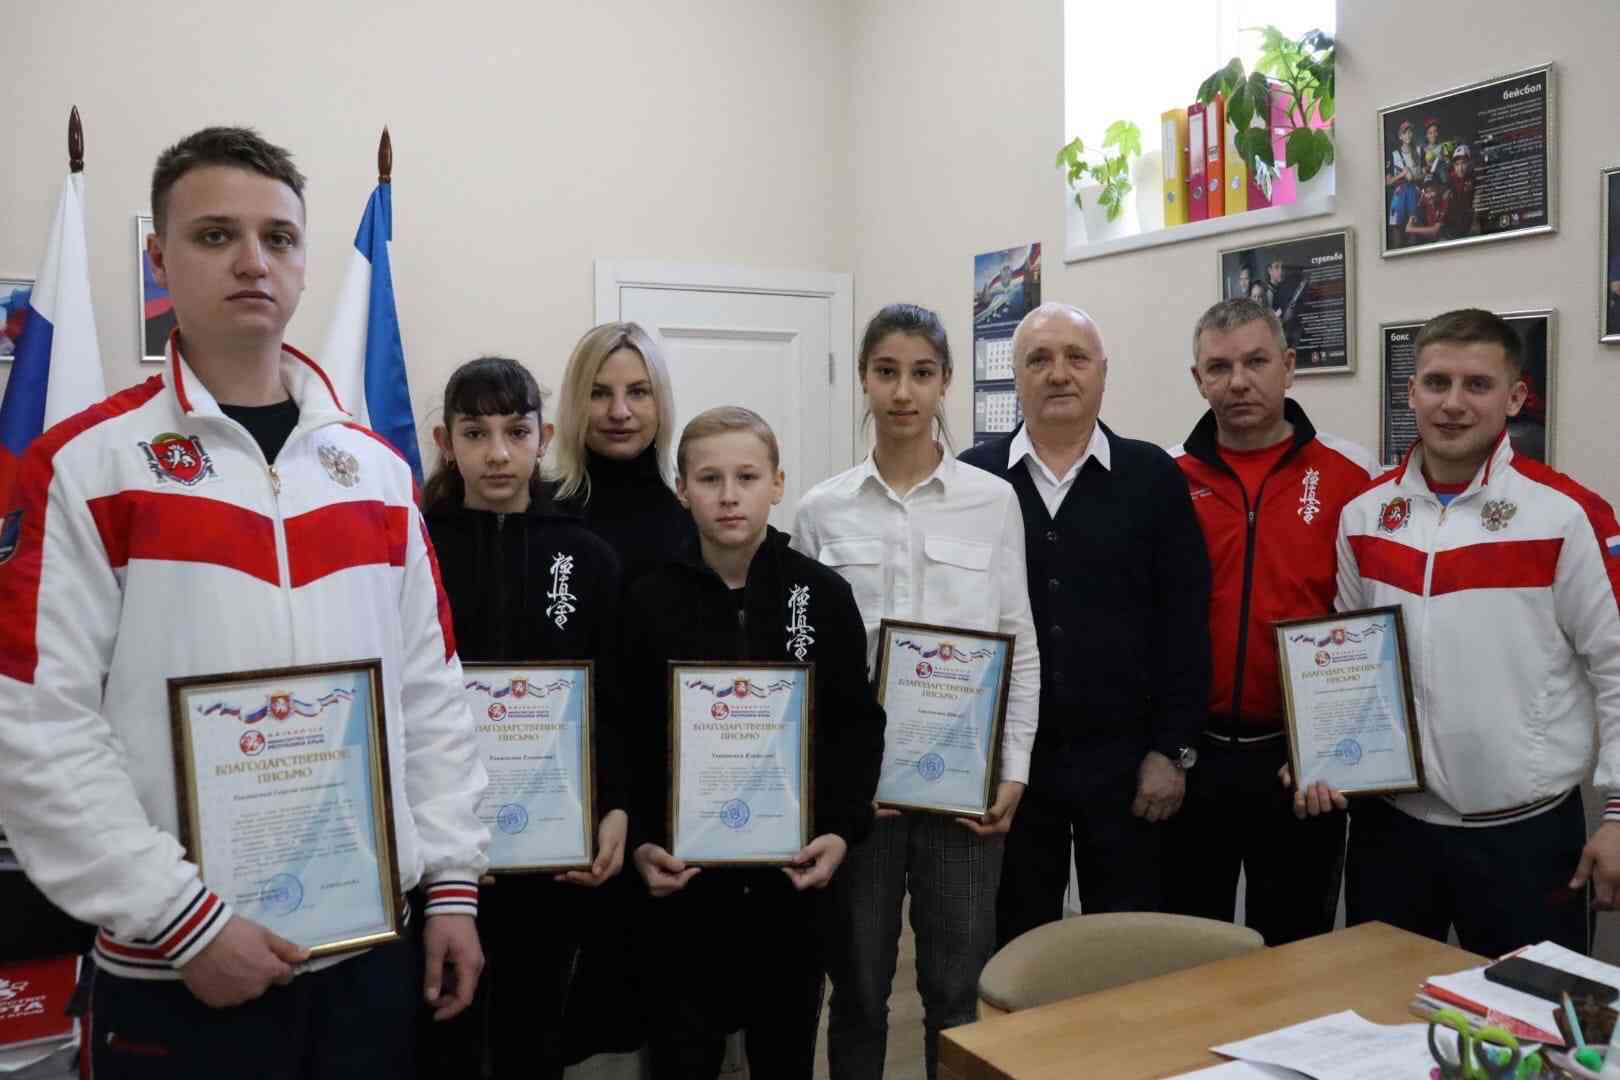 Джанкой в объективе Первенство Джанкоя по каратэ объединило 200 спортсменов Крым первенство крыма по карате